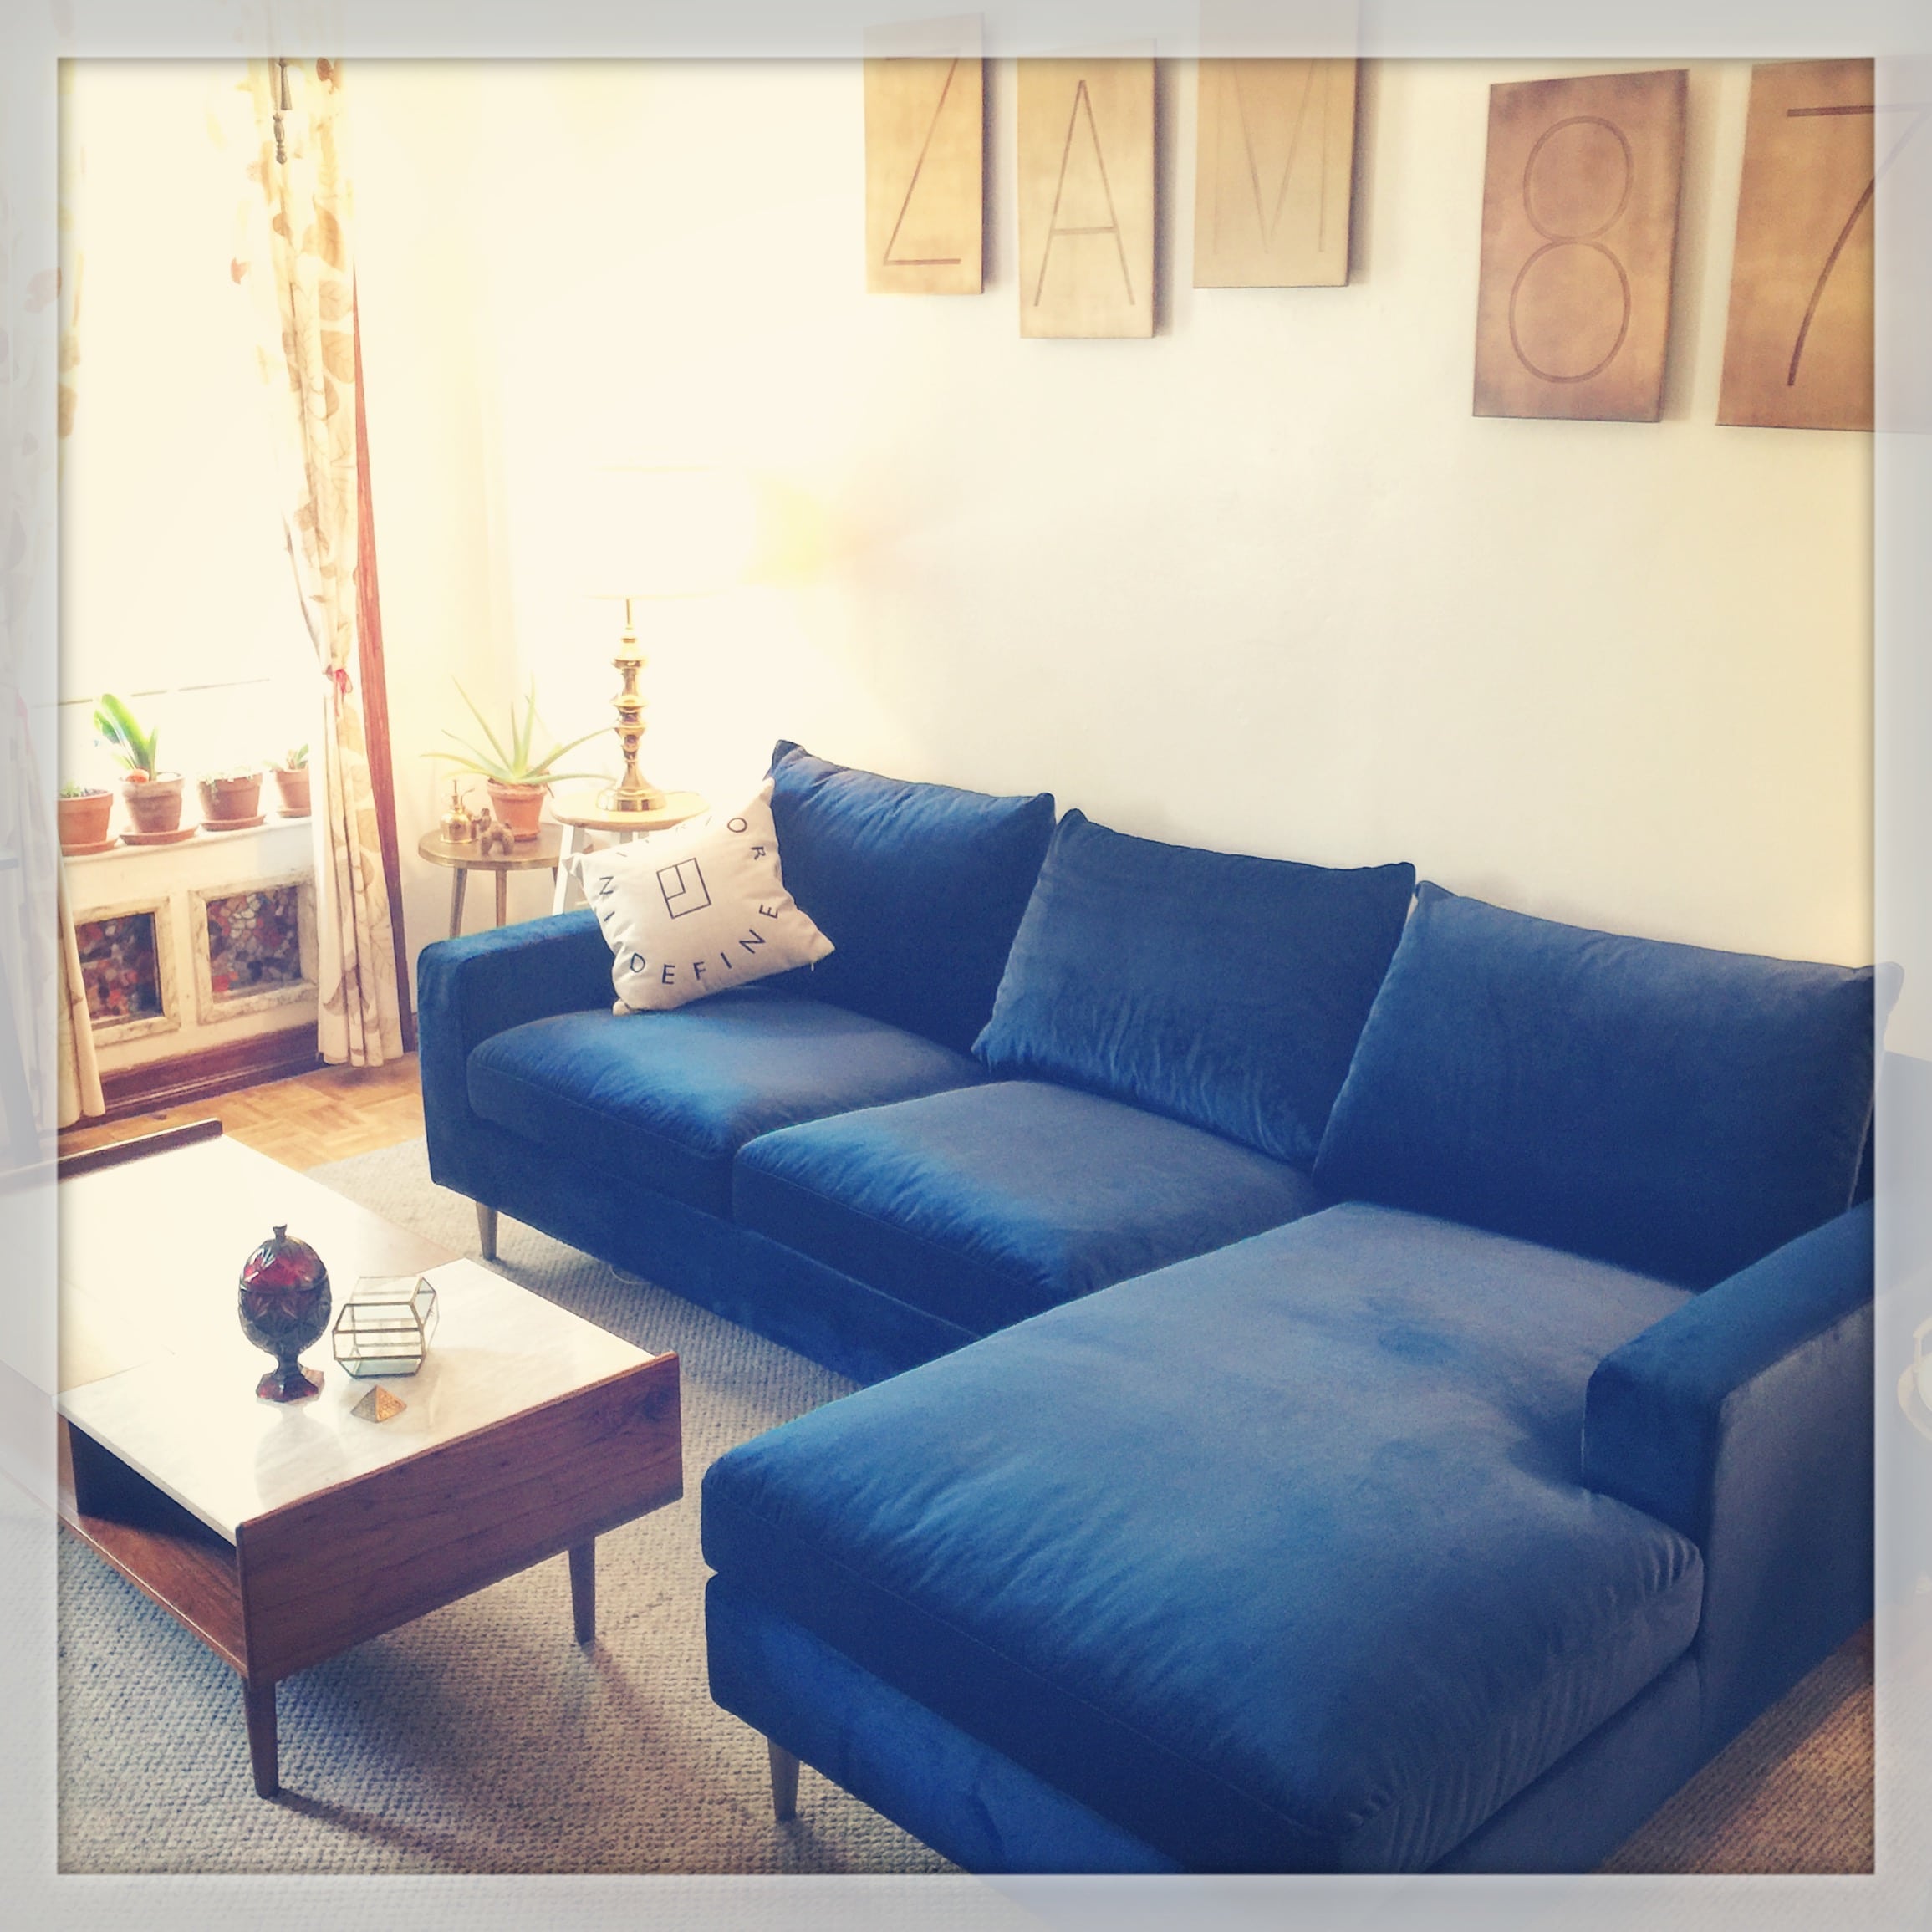 My new sofa has arrived from Interior Define | ZAMARTZ
